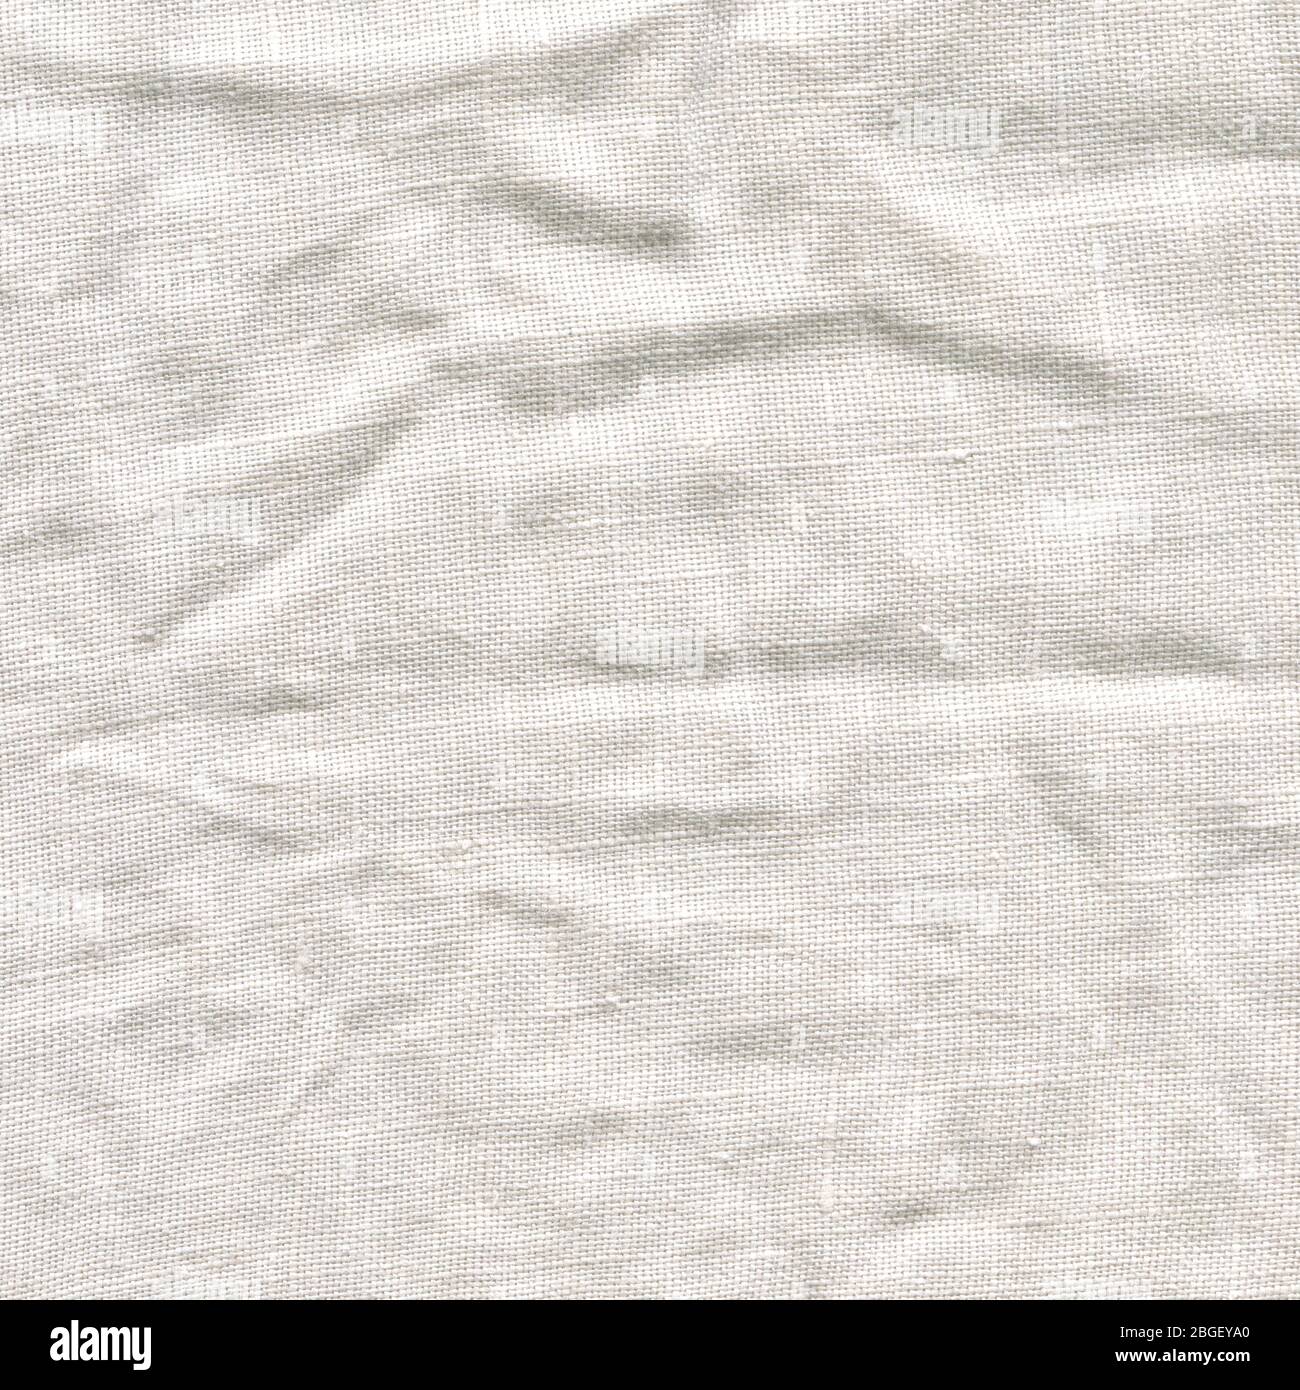 White linen canvas. White fabric texture. Natural linen white background  Stock Photo - Alamy